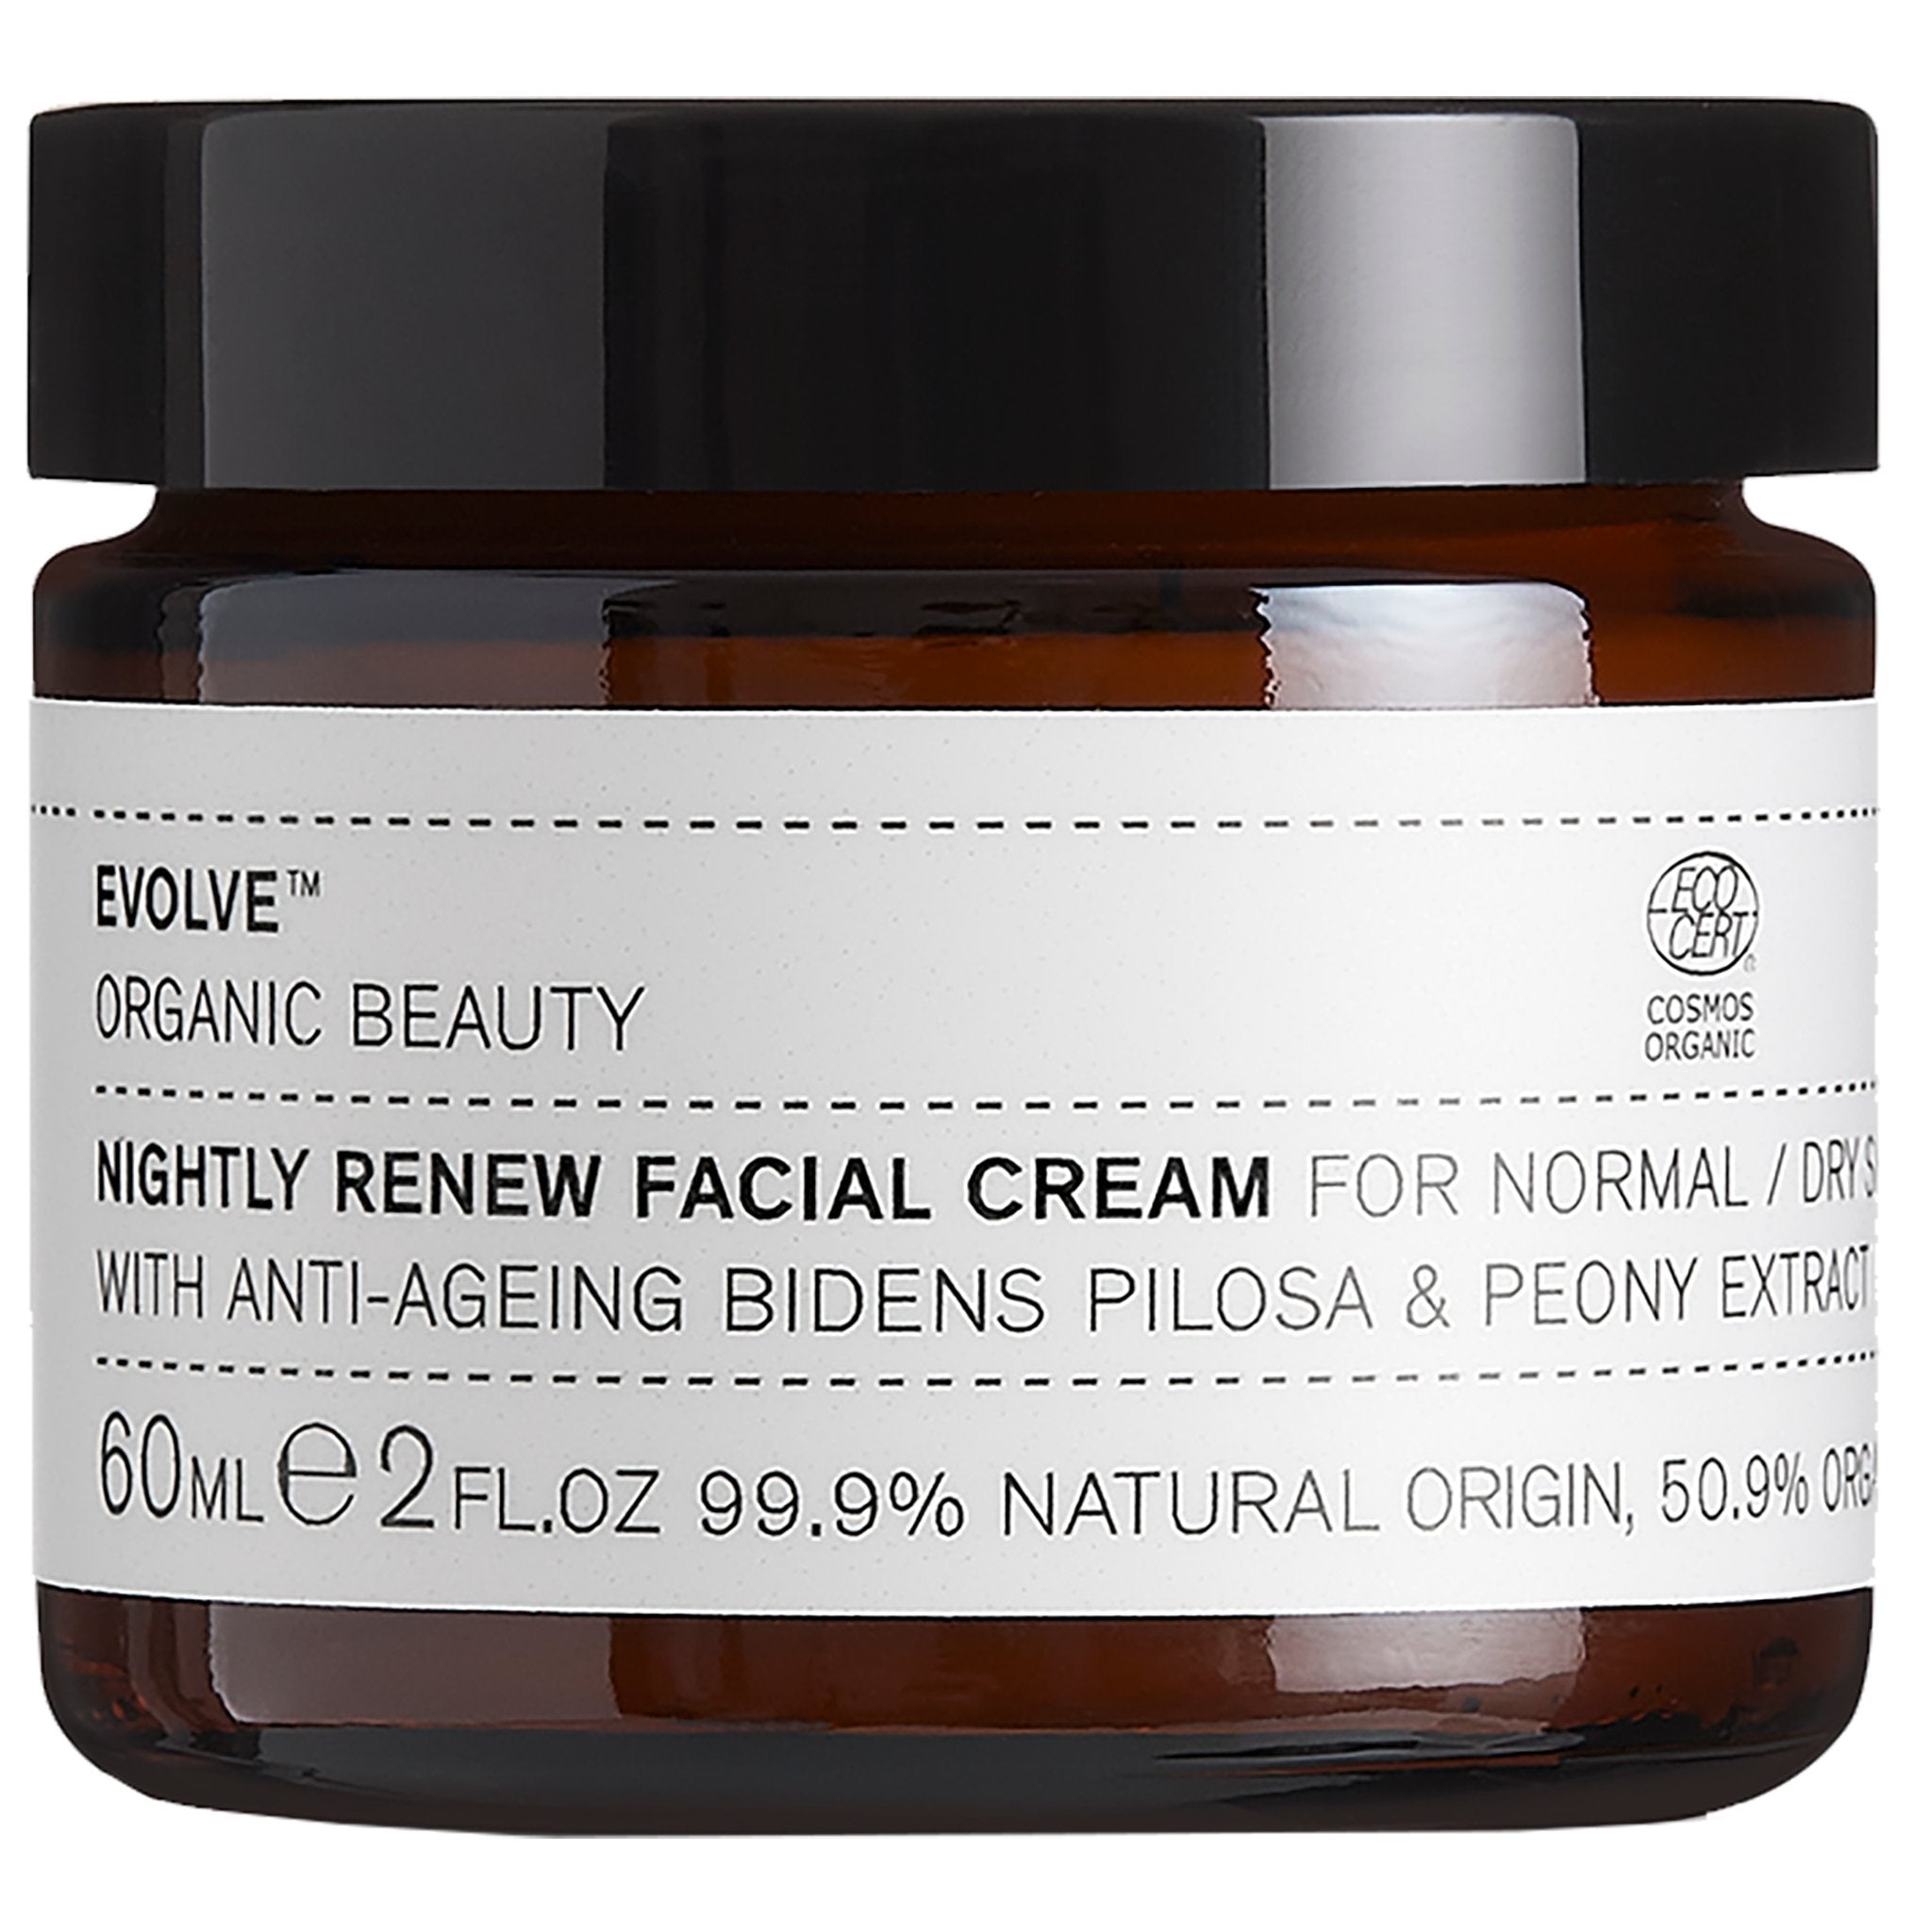 NEW Nightly Renew Facial Cream - mypure.co.uk